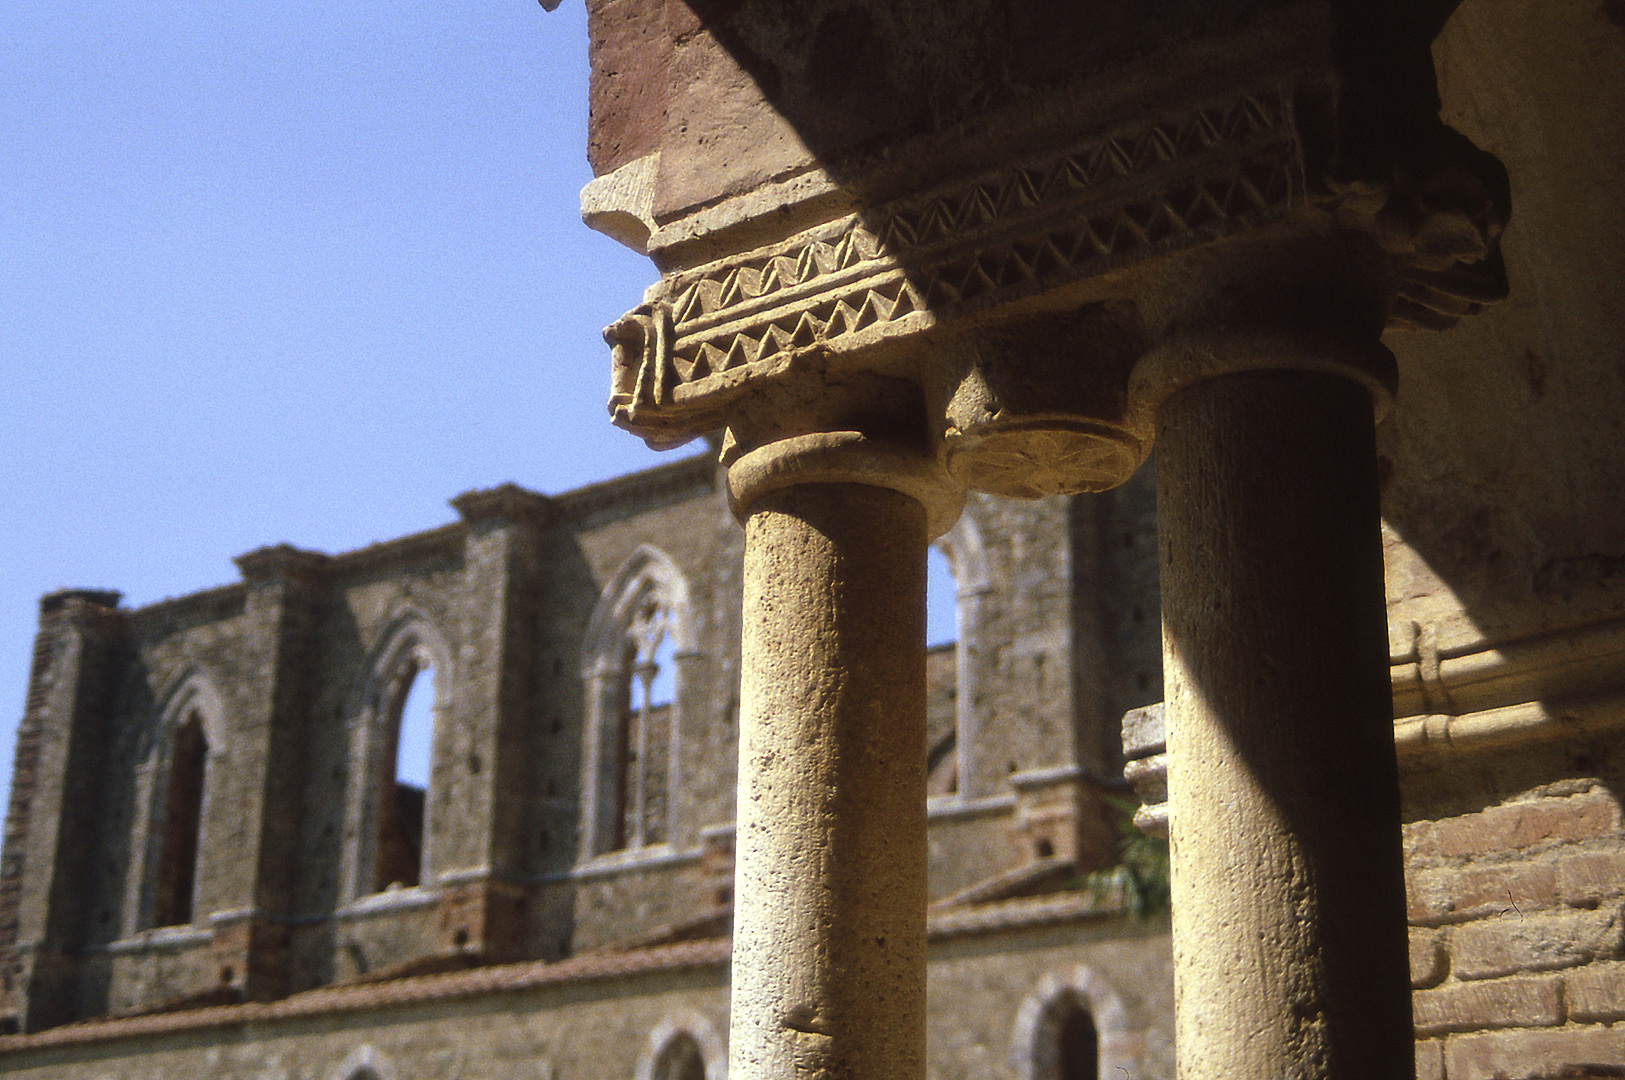 Abdij van San Galgano, Toscane, Itali, Abbey of San Galgano, Tuscany, Italy